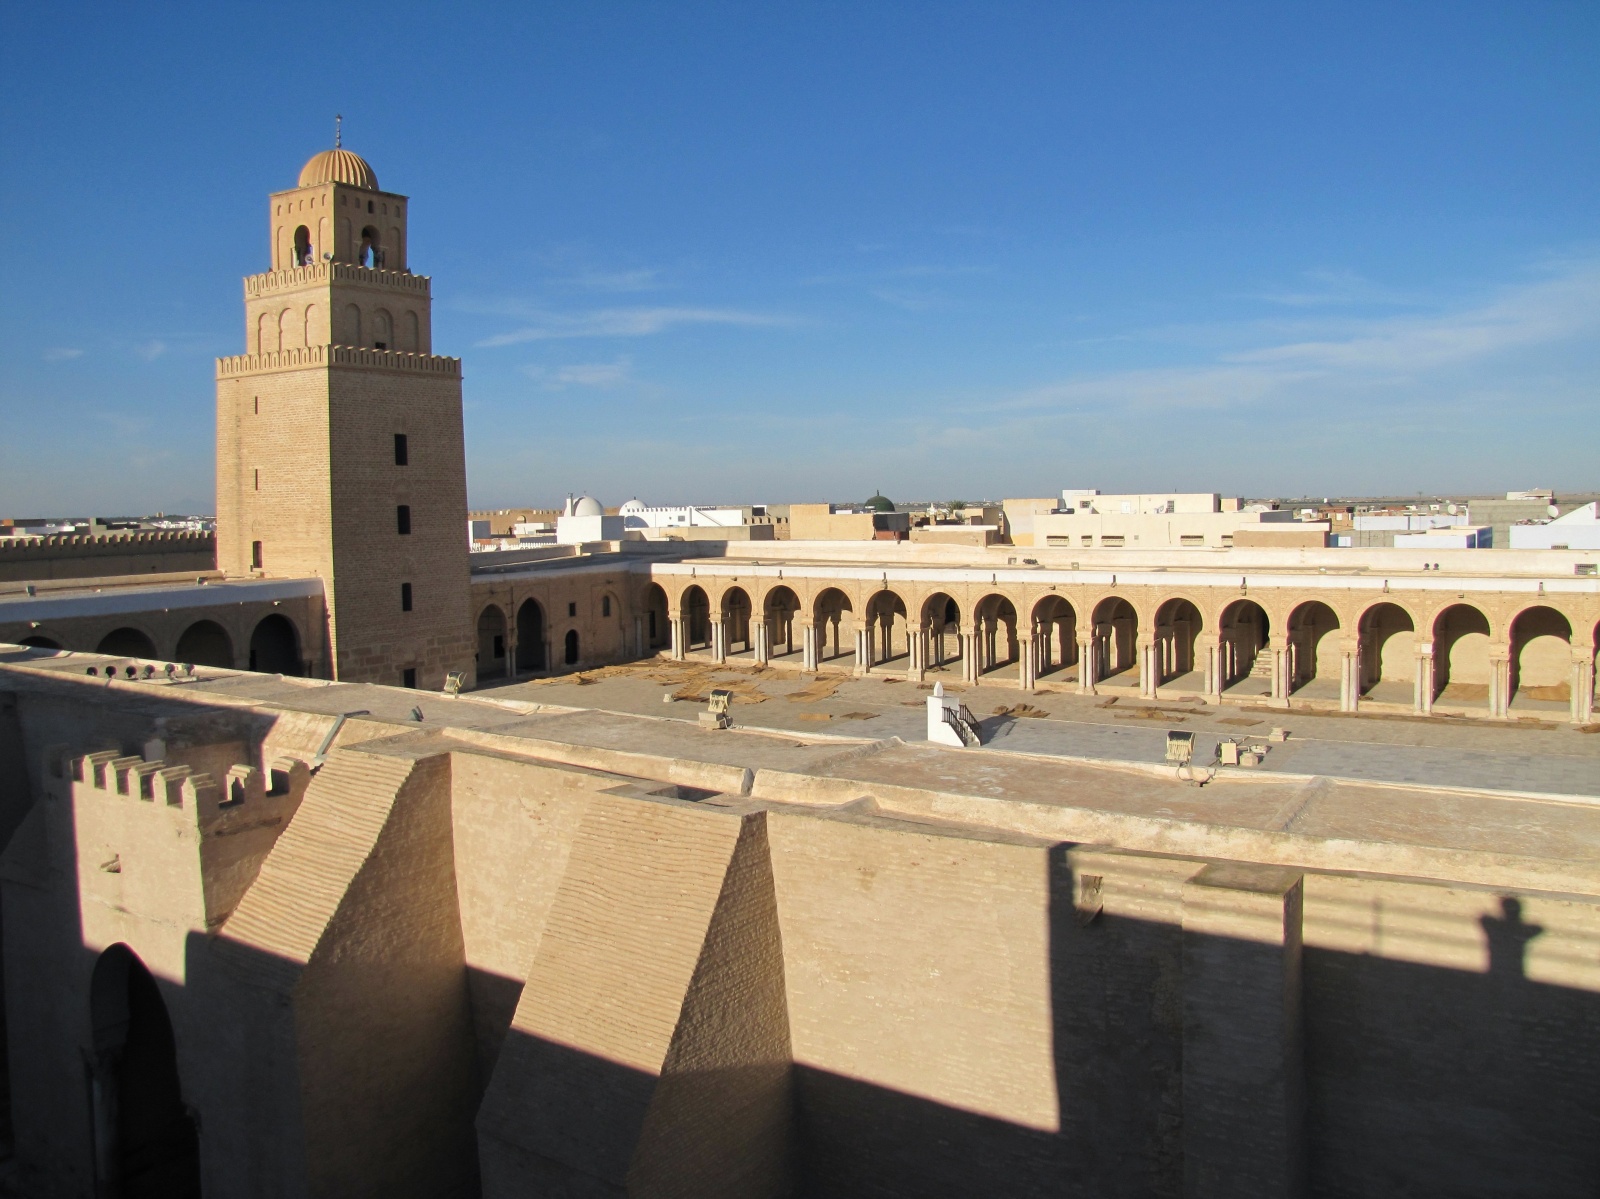 Город столица арабского халифата. Кайруан Тунис. Кайруан Тунис достопримечательности. Минарет мечети в Кайруане Тунис. Исторический город Кайруан.